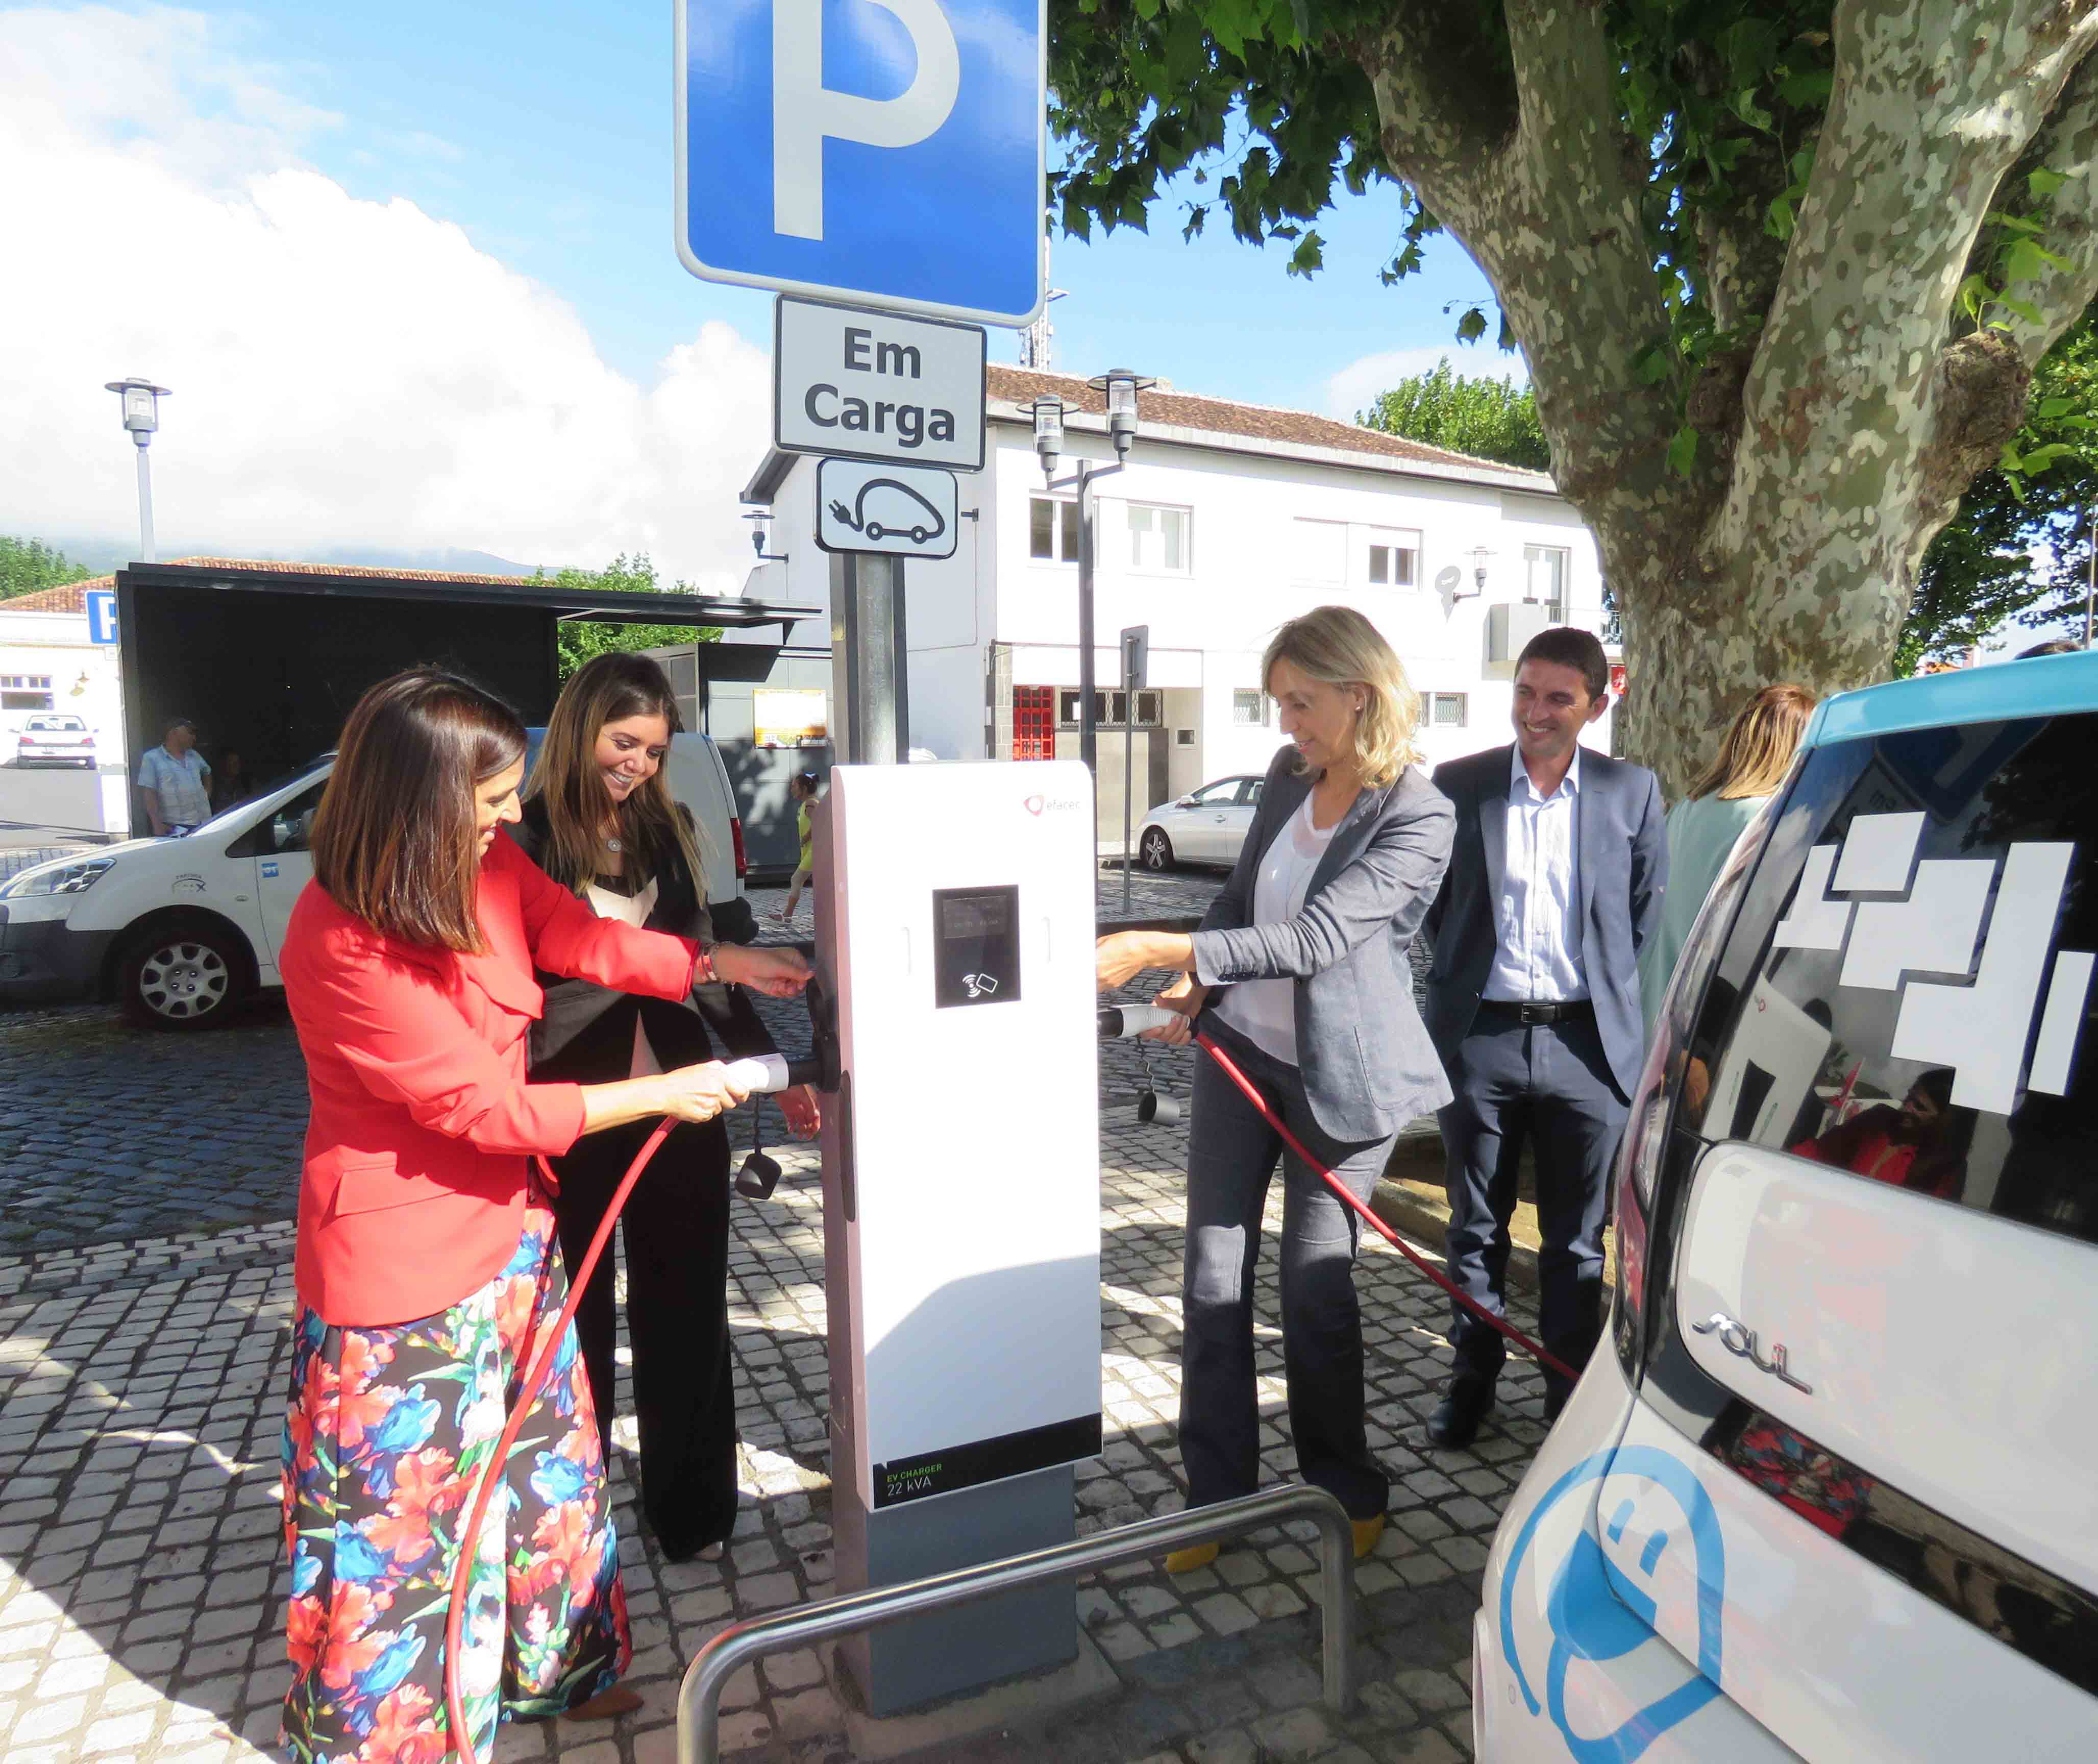 EV charging station in São Miguel island, Azores 